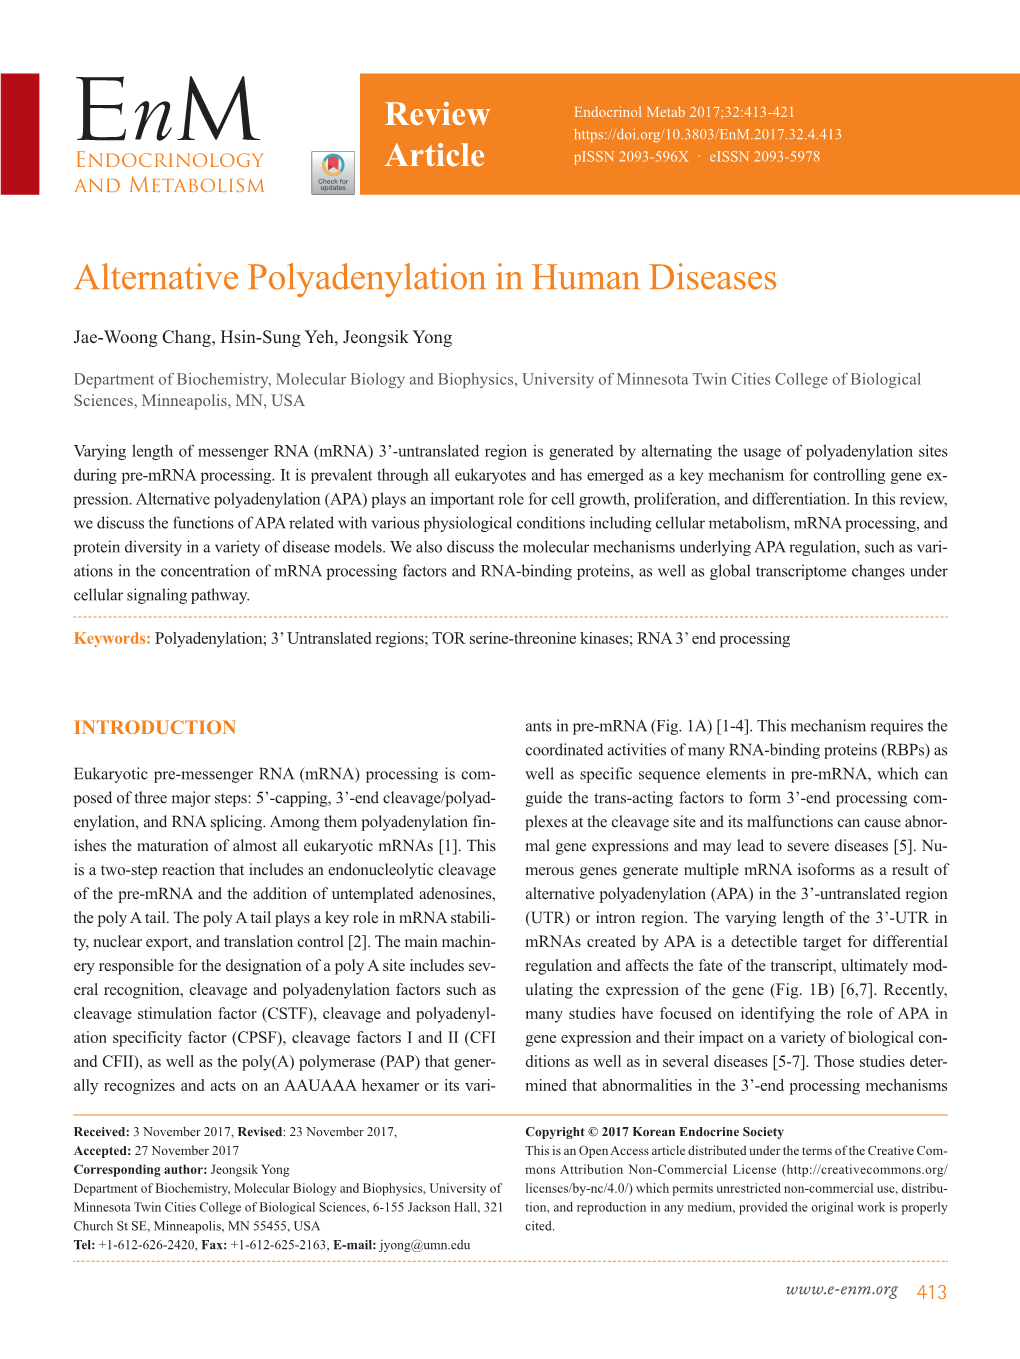 Alternative Polyadenylation in Human Diseases